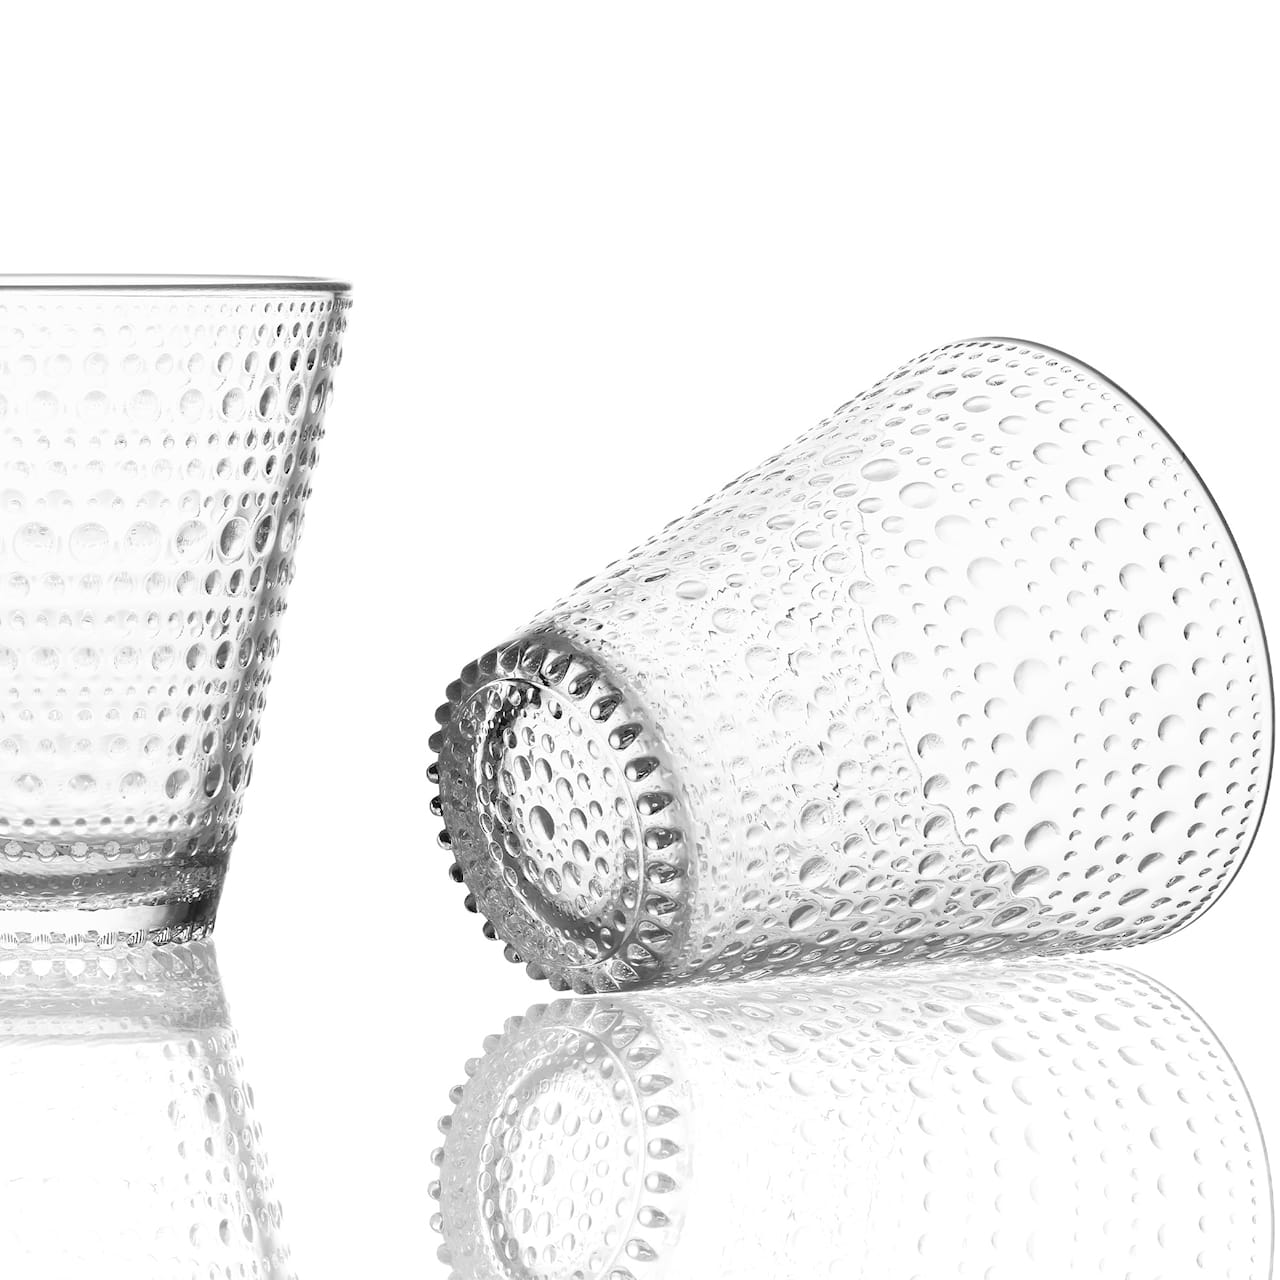 Kastehelmi Drinking Glass 2-Pack